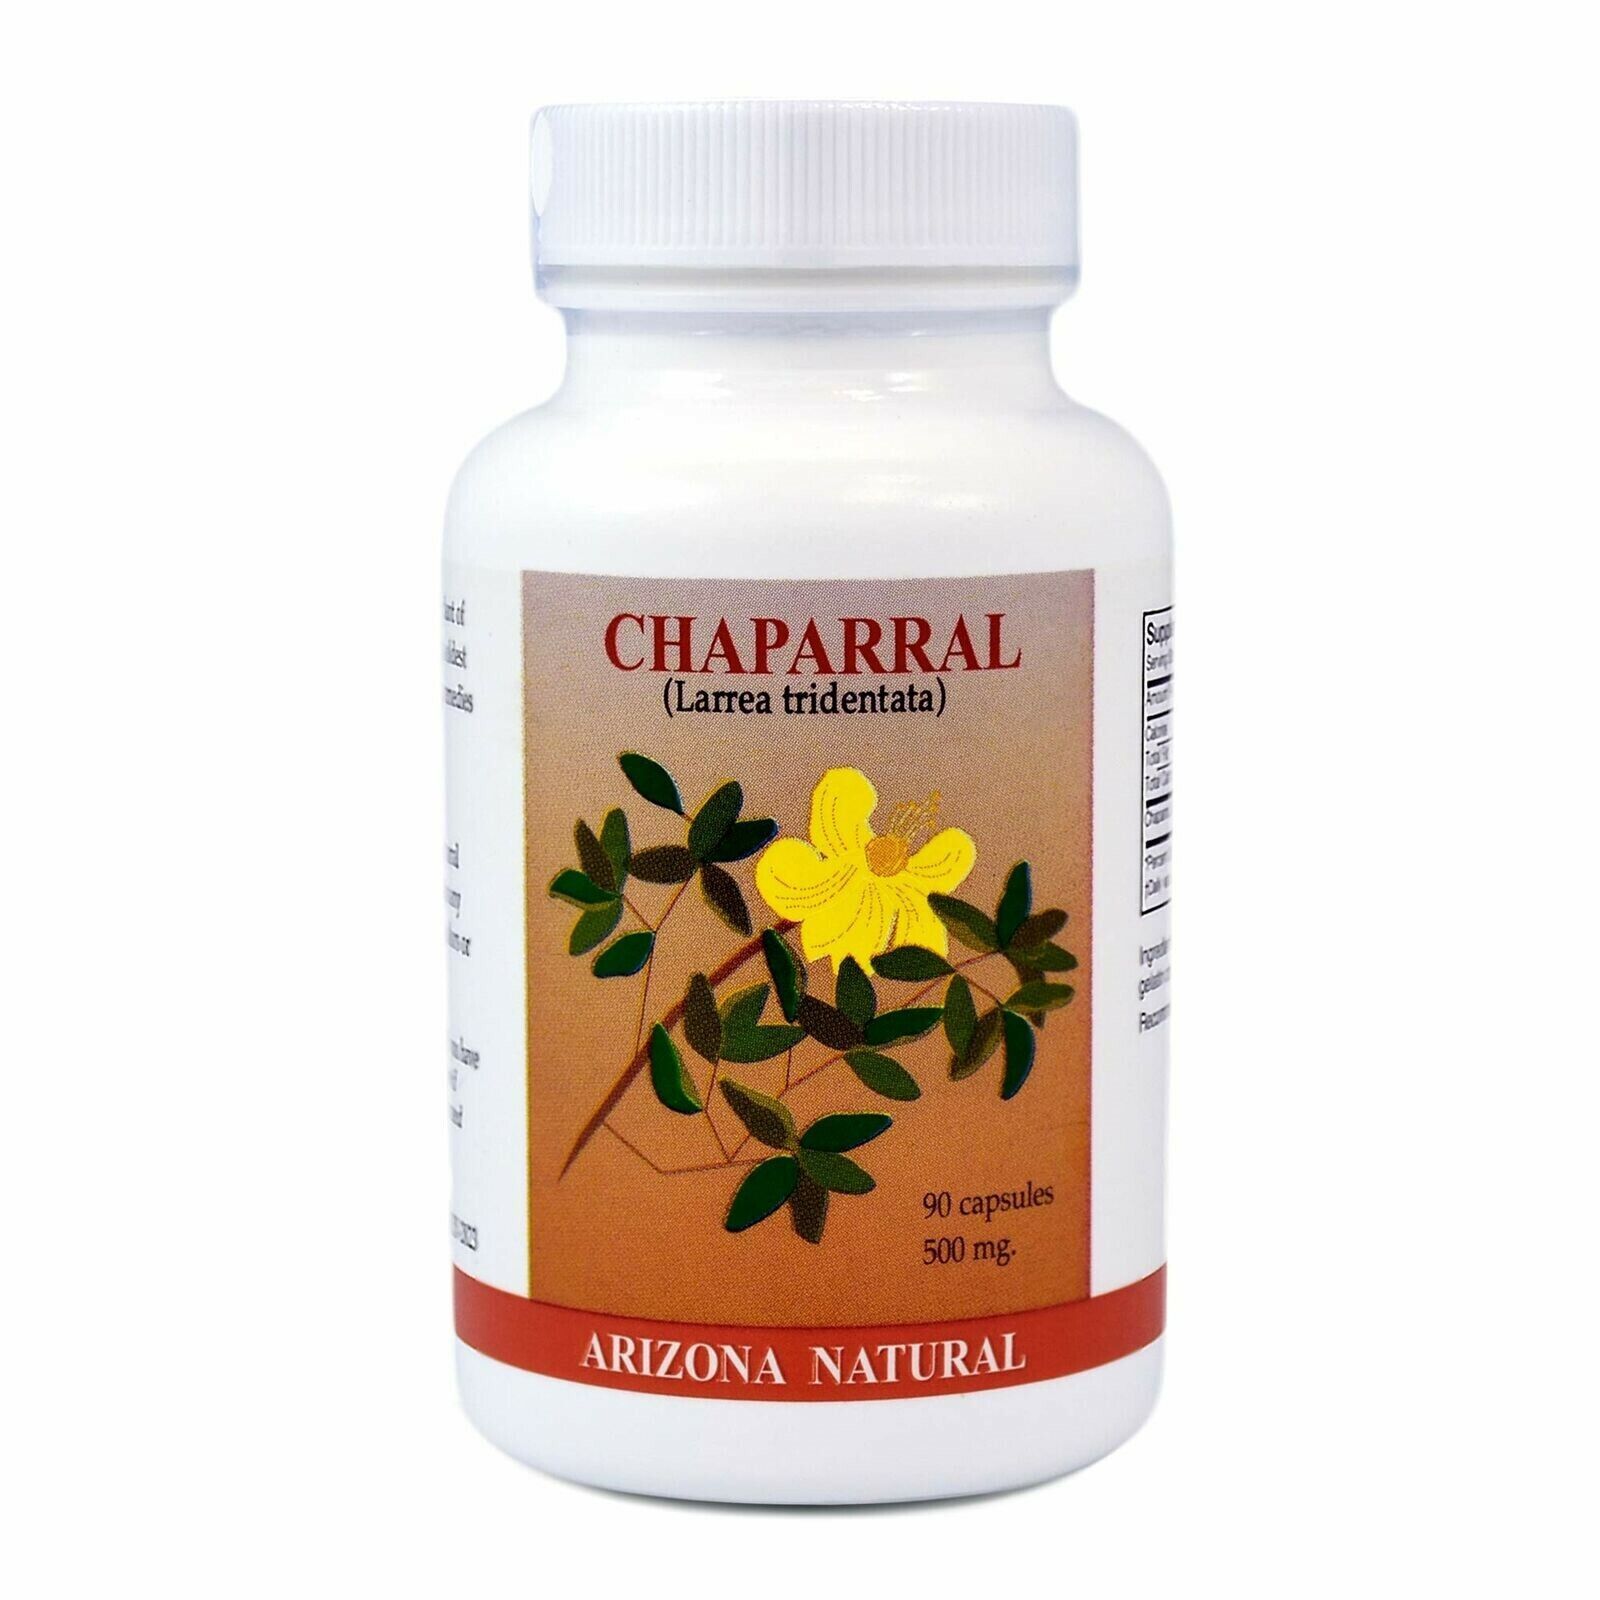 Arizona Natural - Chaparral (Larrea Tridentata) 500 mg, 90 Capsules - $17.89